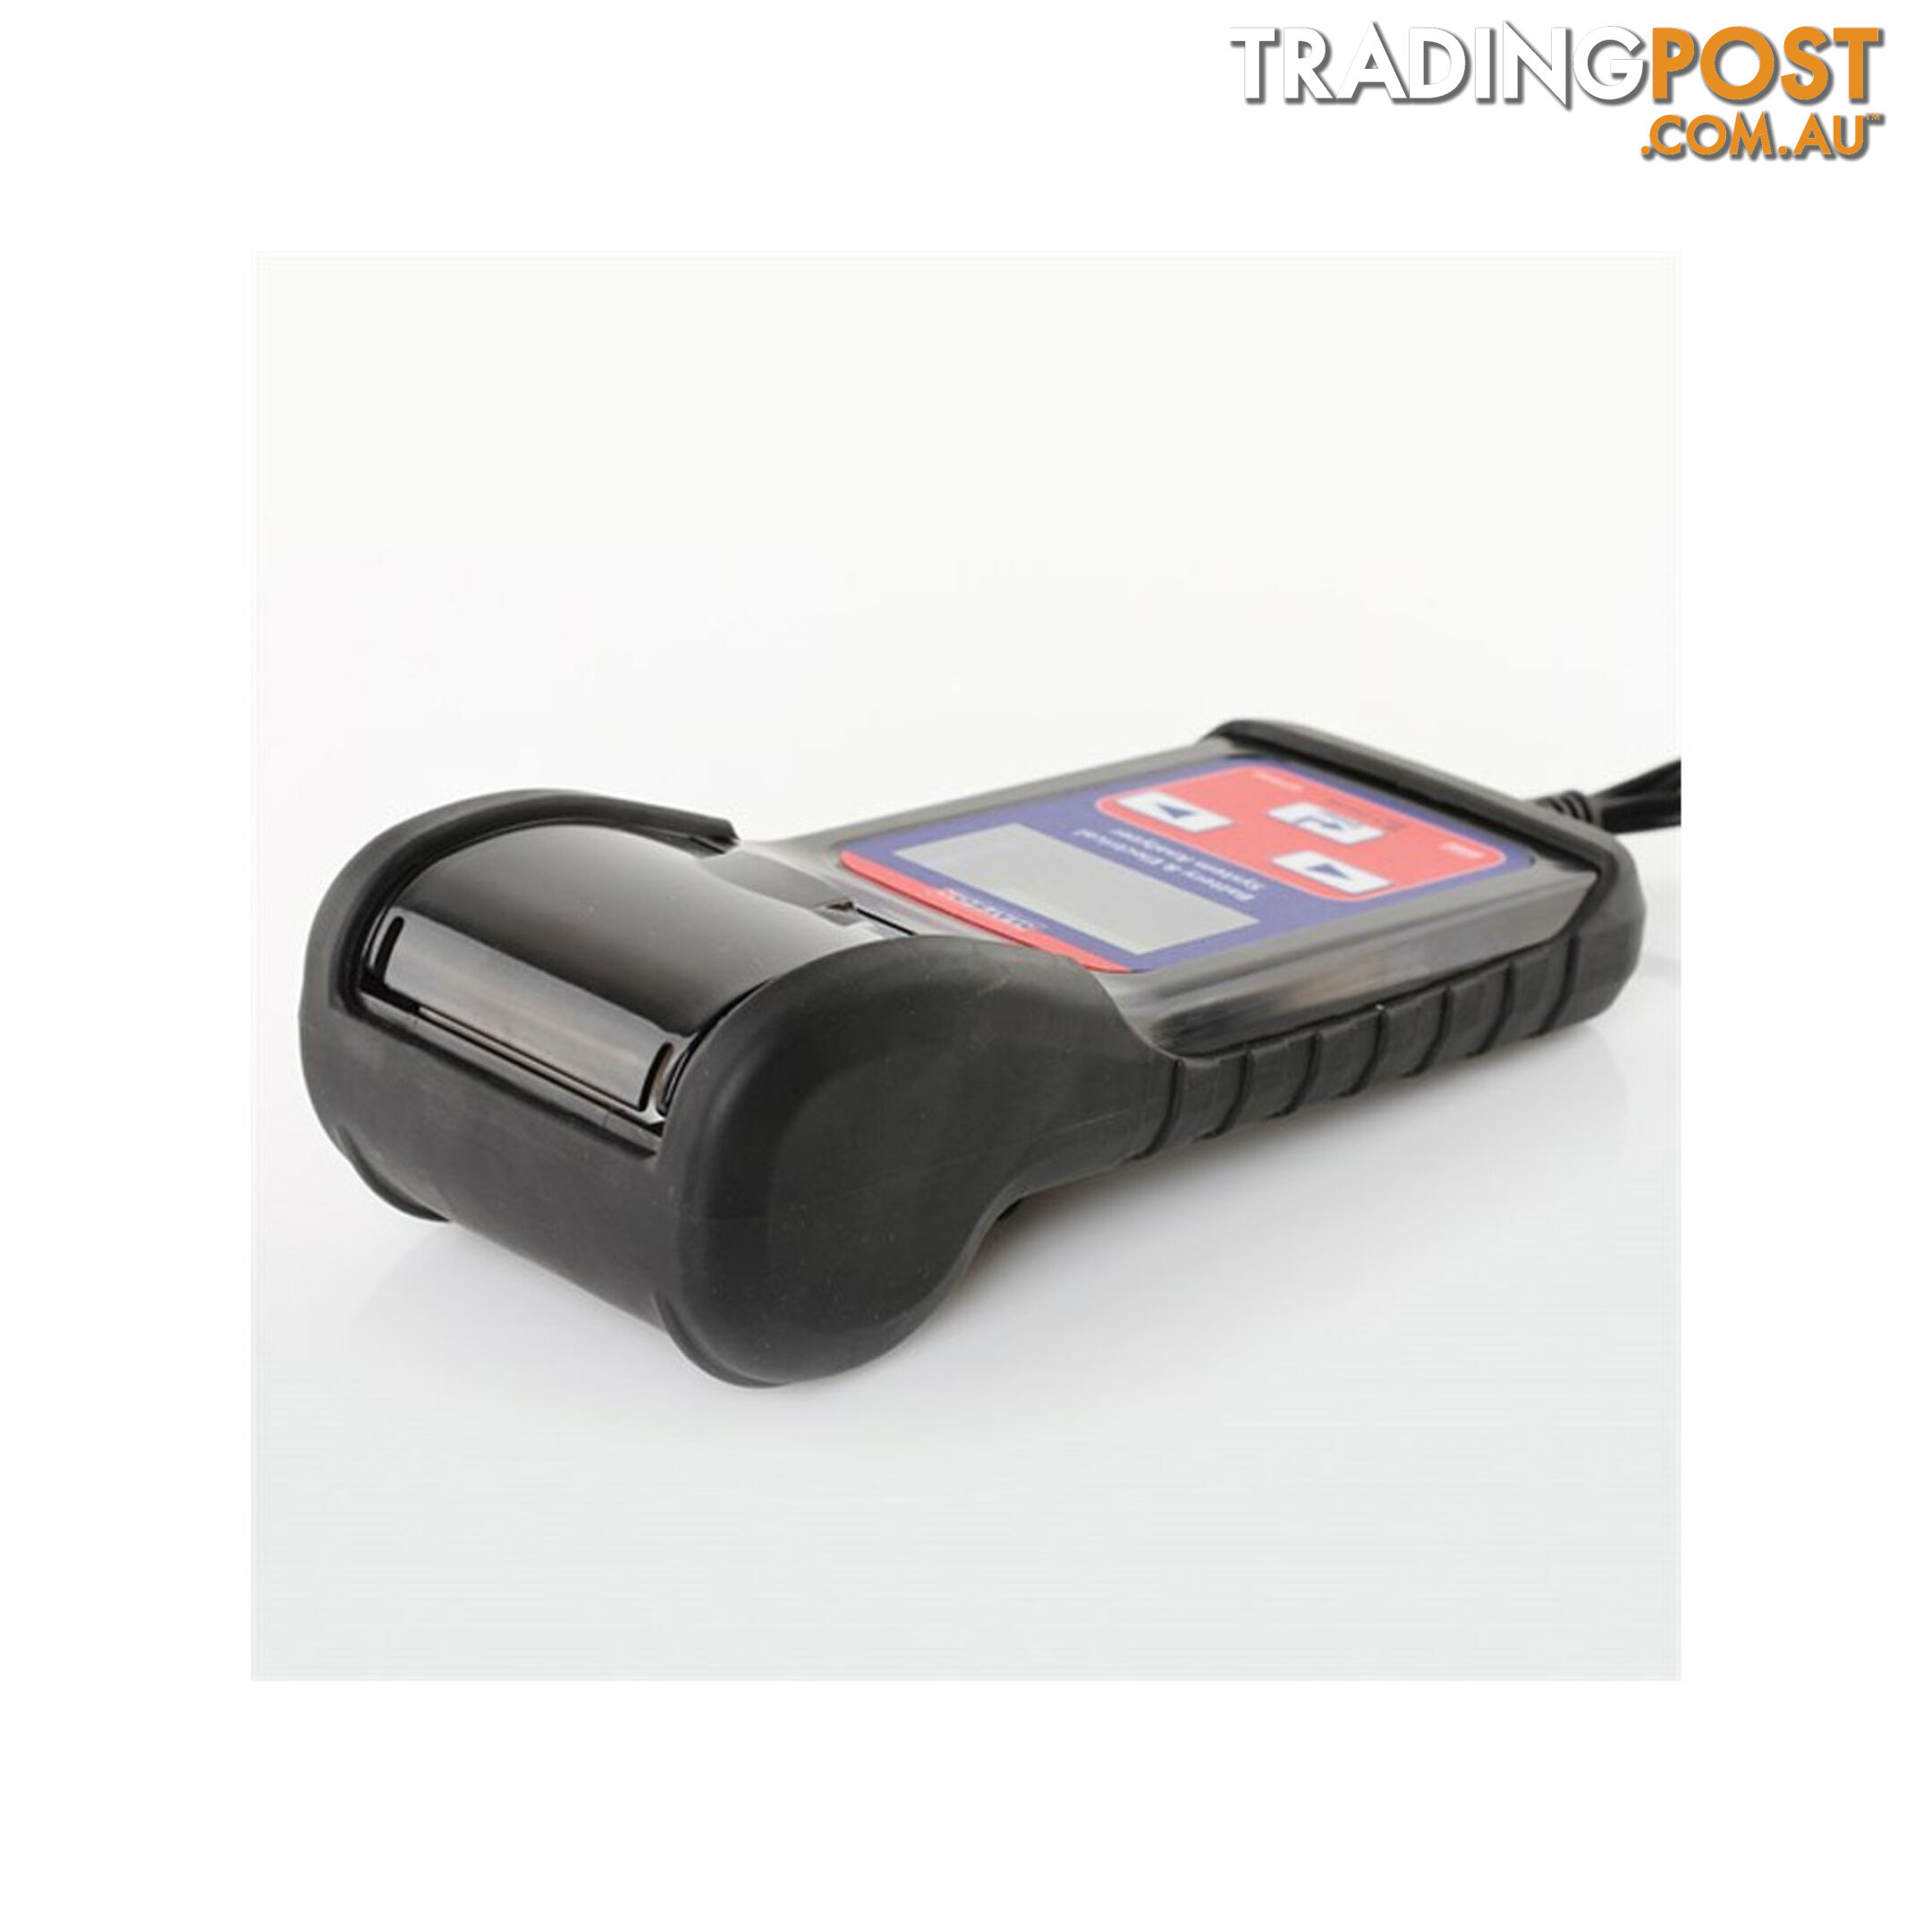 Matson Digital Battery   System Analyser w/ Printer SKU - BT900